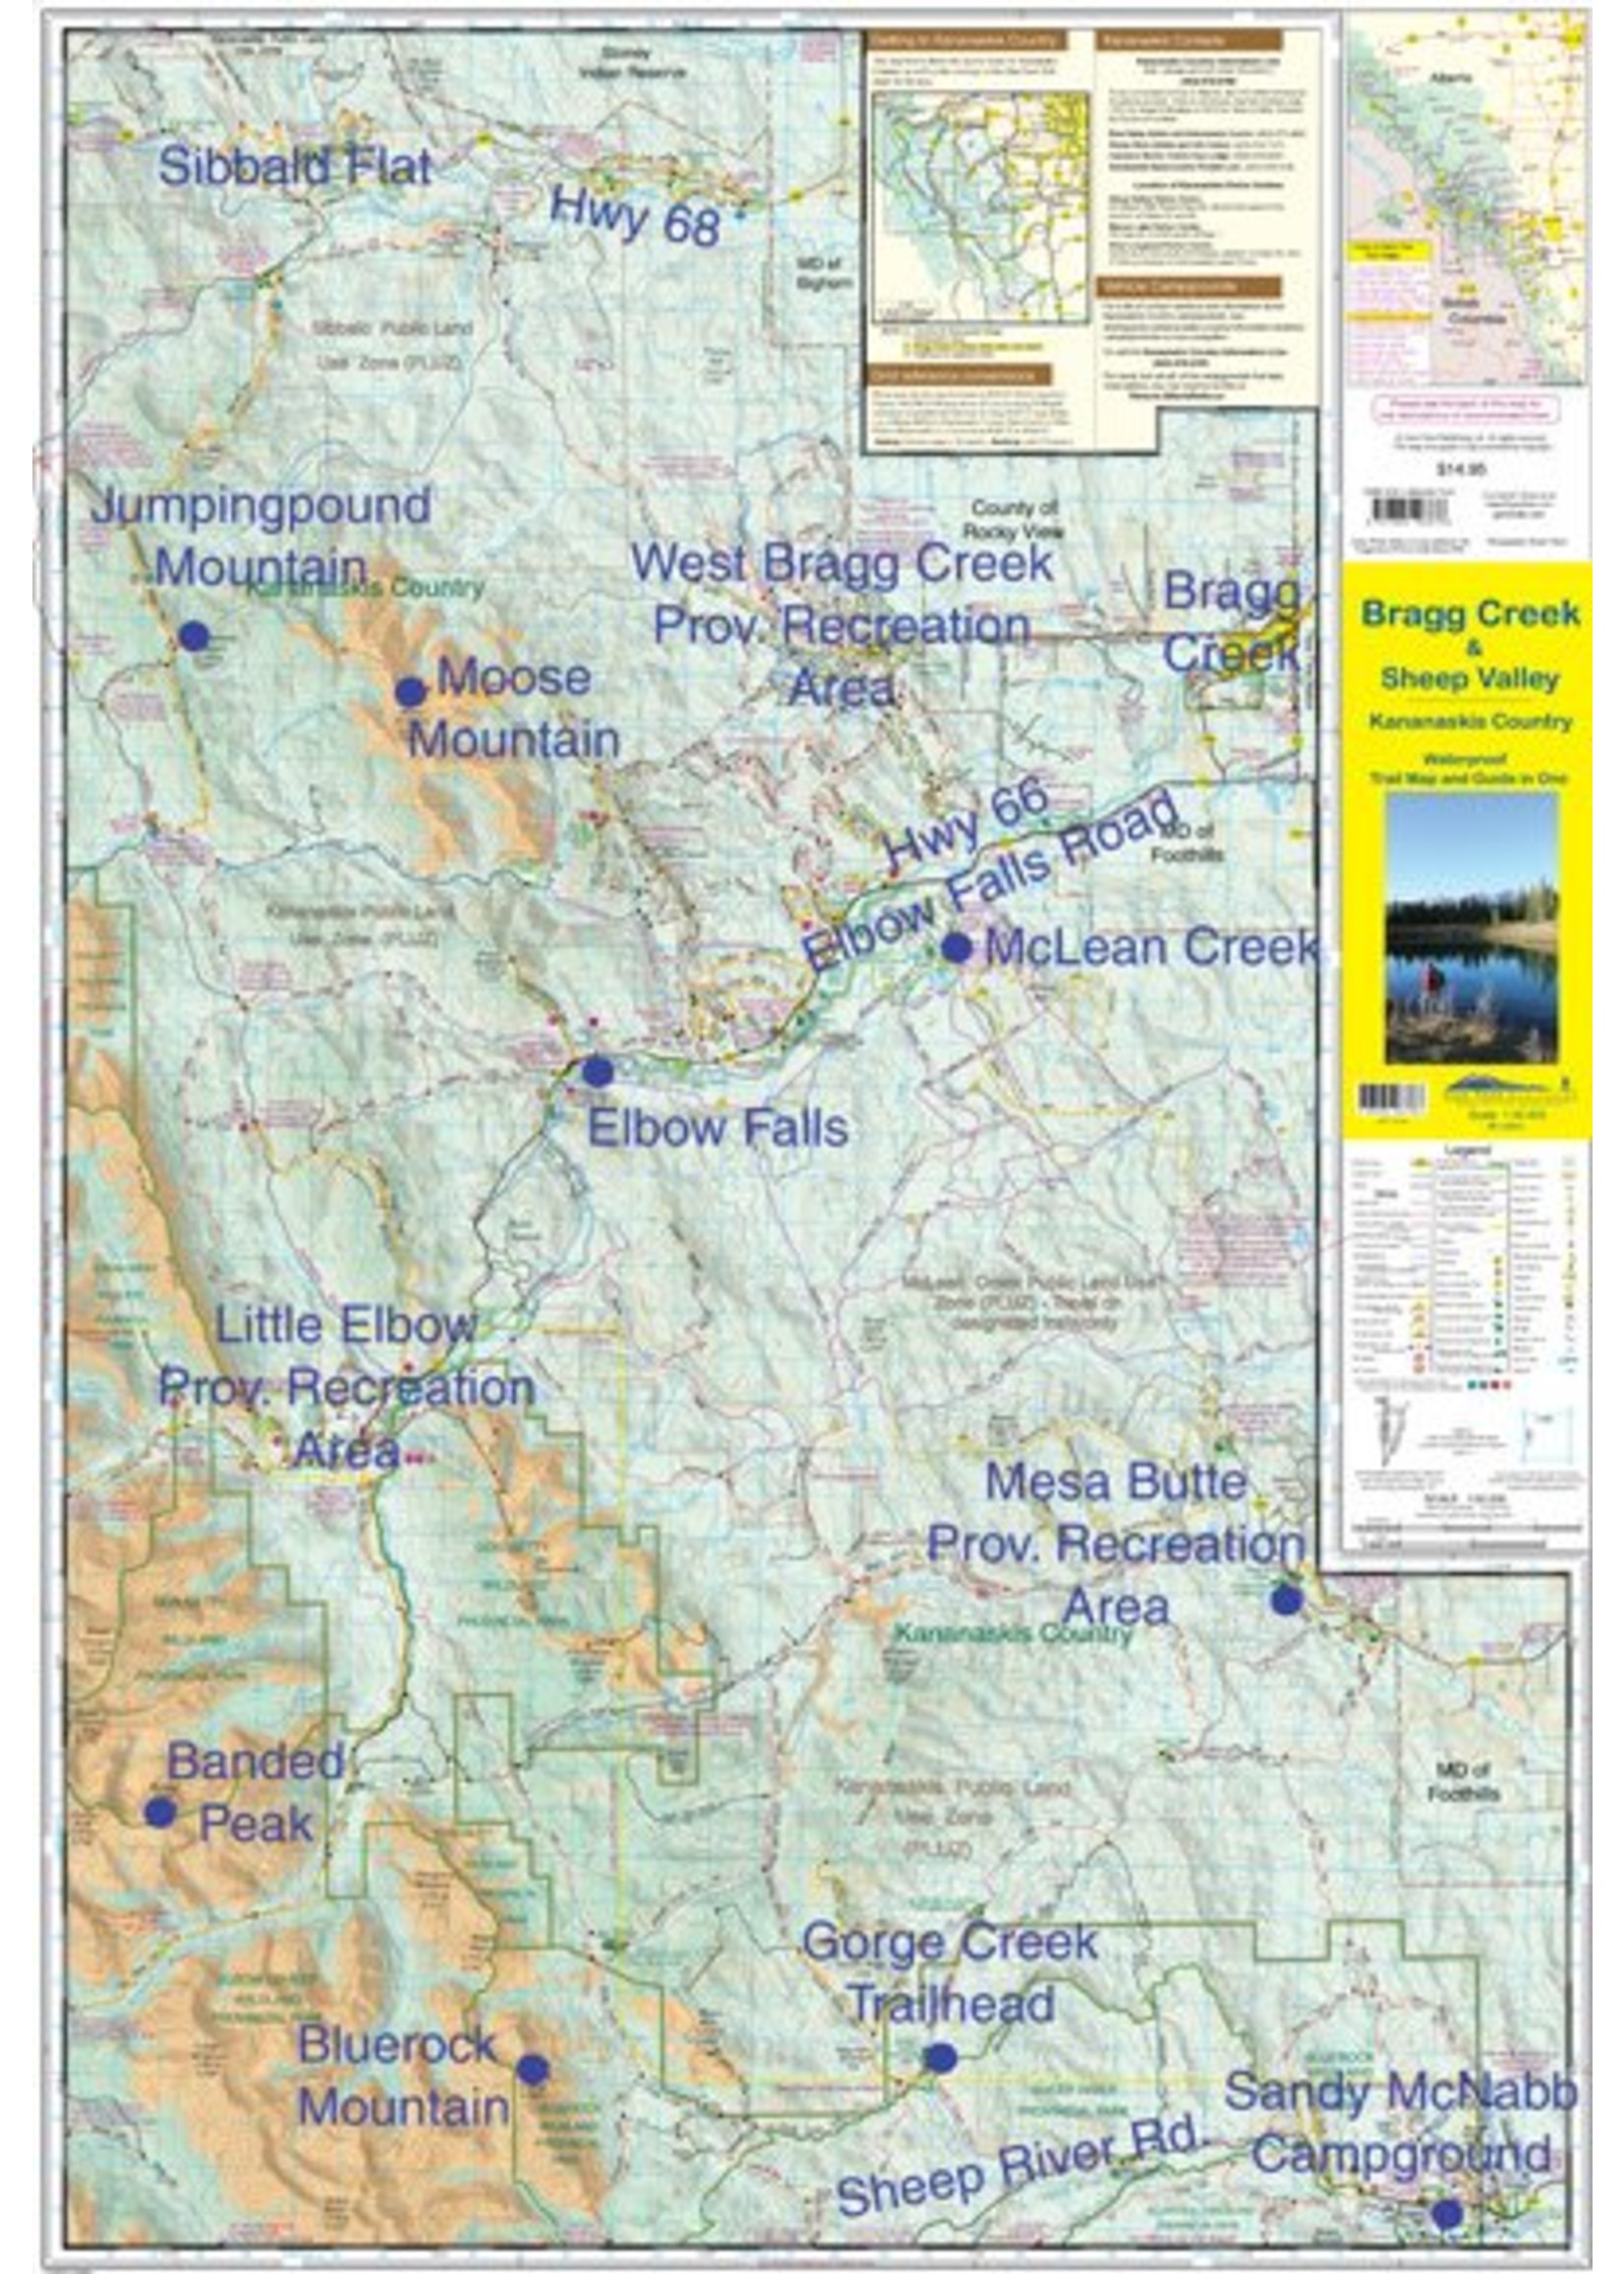 Gemtrek map Bragg Creek and Sheep Valley